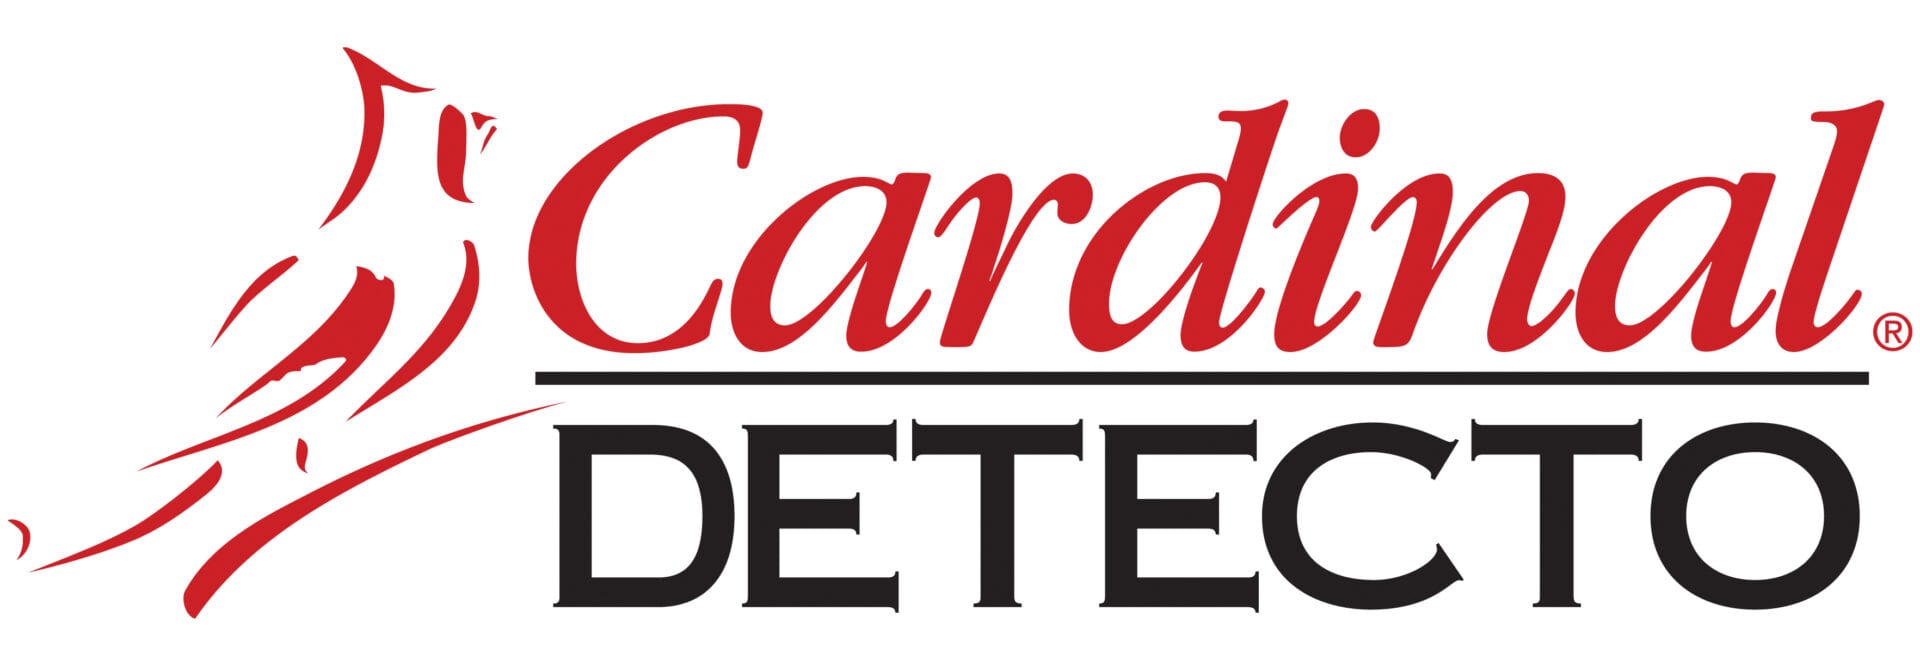 https://mnmscales.com/wp-content/uploads/2019/07/Cardinal-Detecto-Logo.jpg